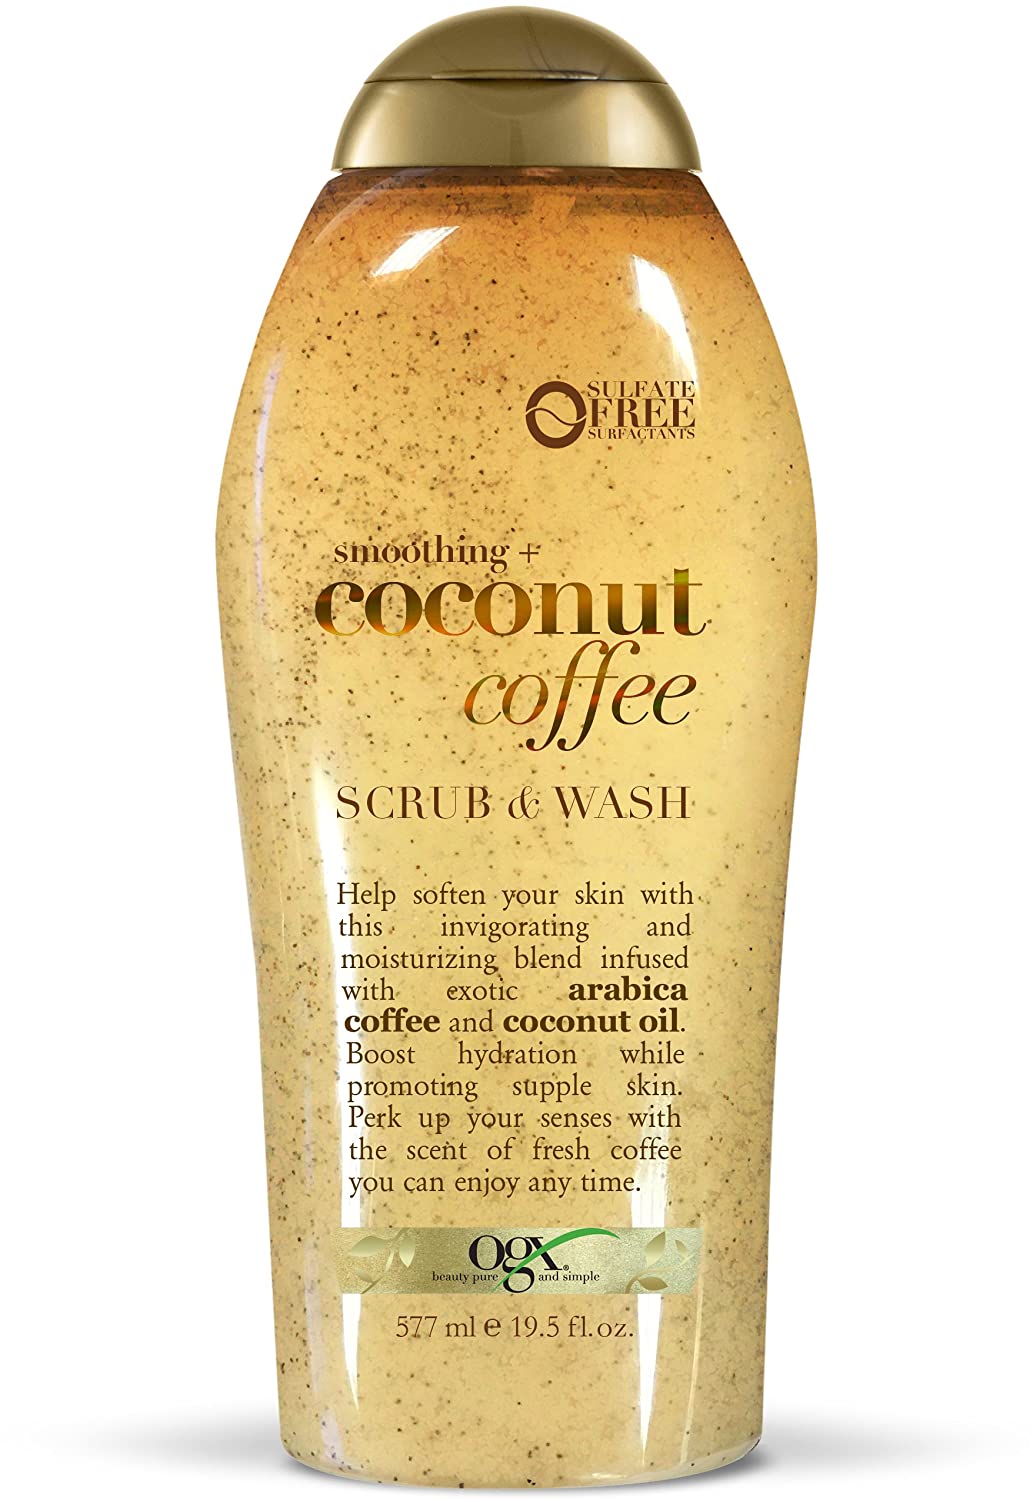 19.5-Oz OGX Coffee Scrub and Wash (Coconut) $4.49 w/ S&S + Free Shipping w/ Prime or on $25+